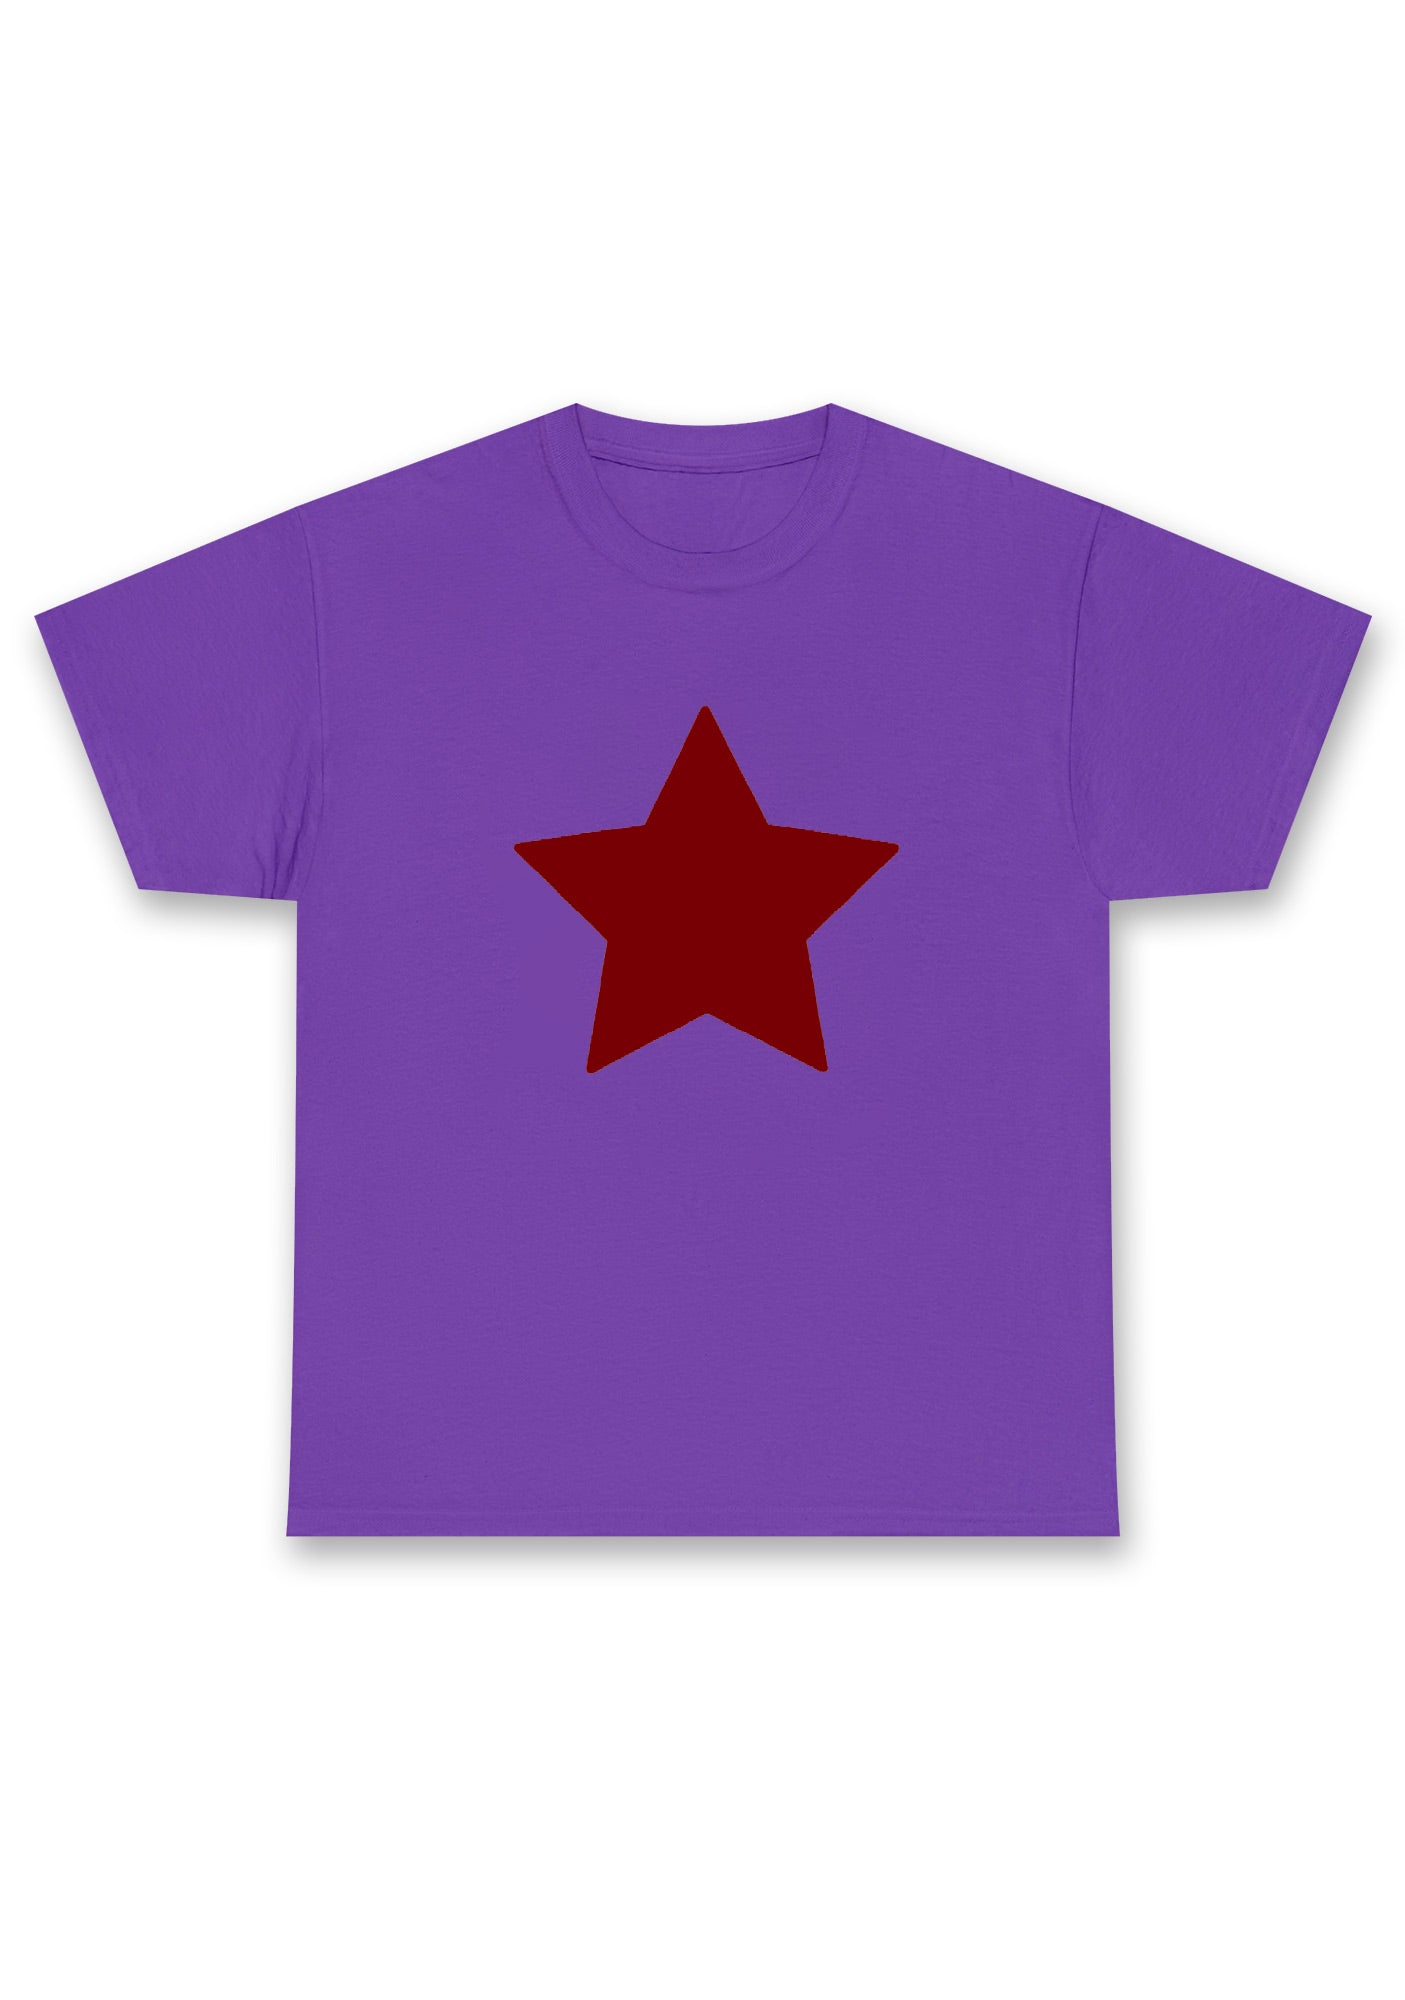 Red Pentagram Chunky Shirt